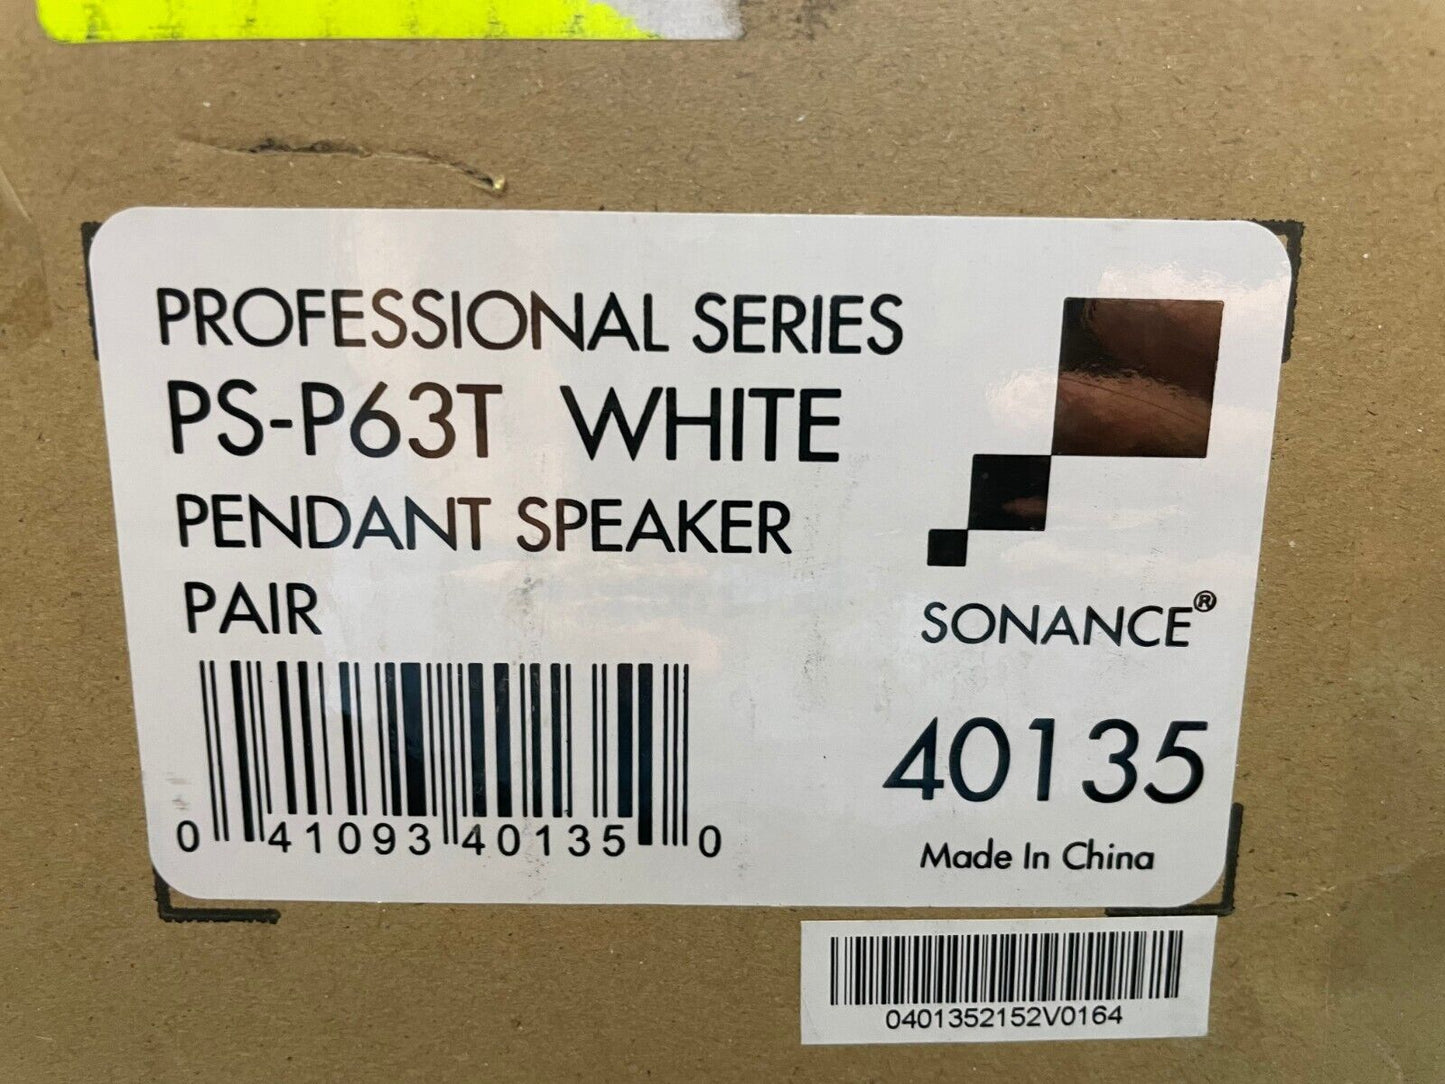 Sonance PS-P63T Hanging Pendant Speakers - White PAIR